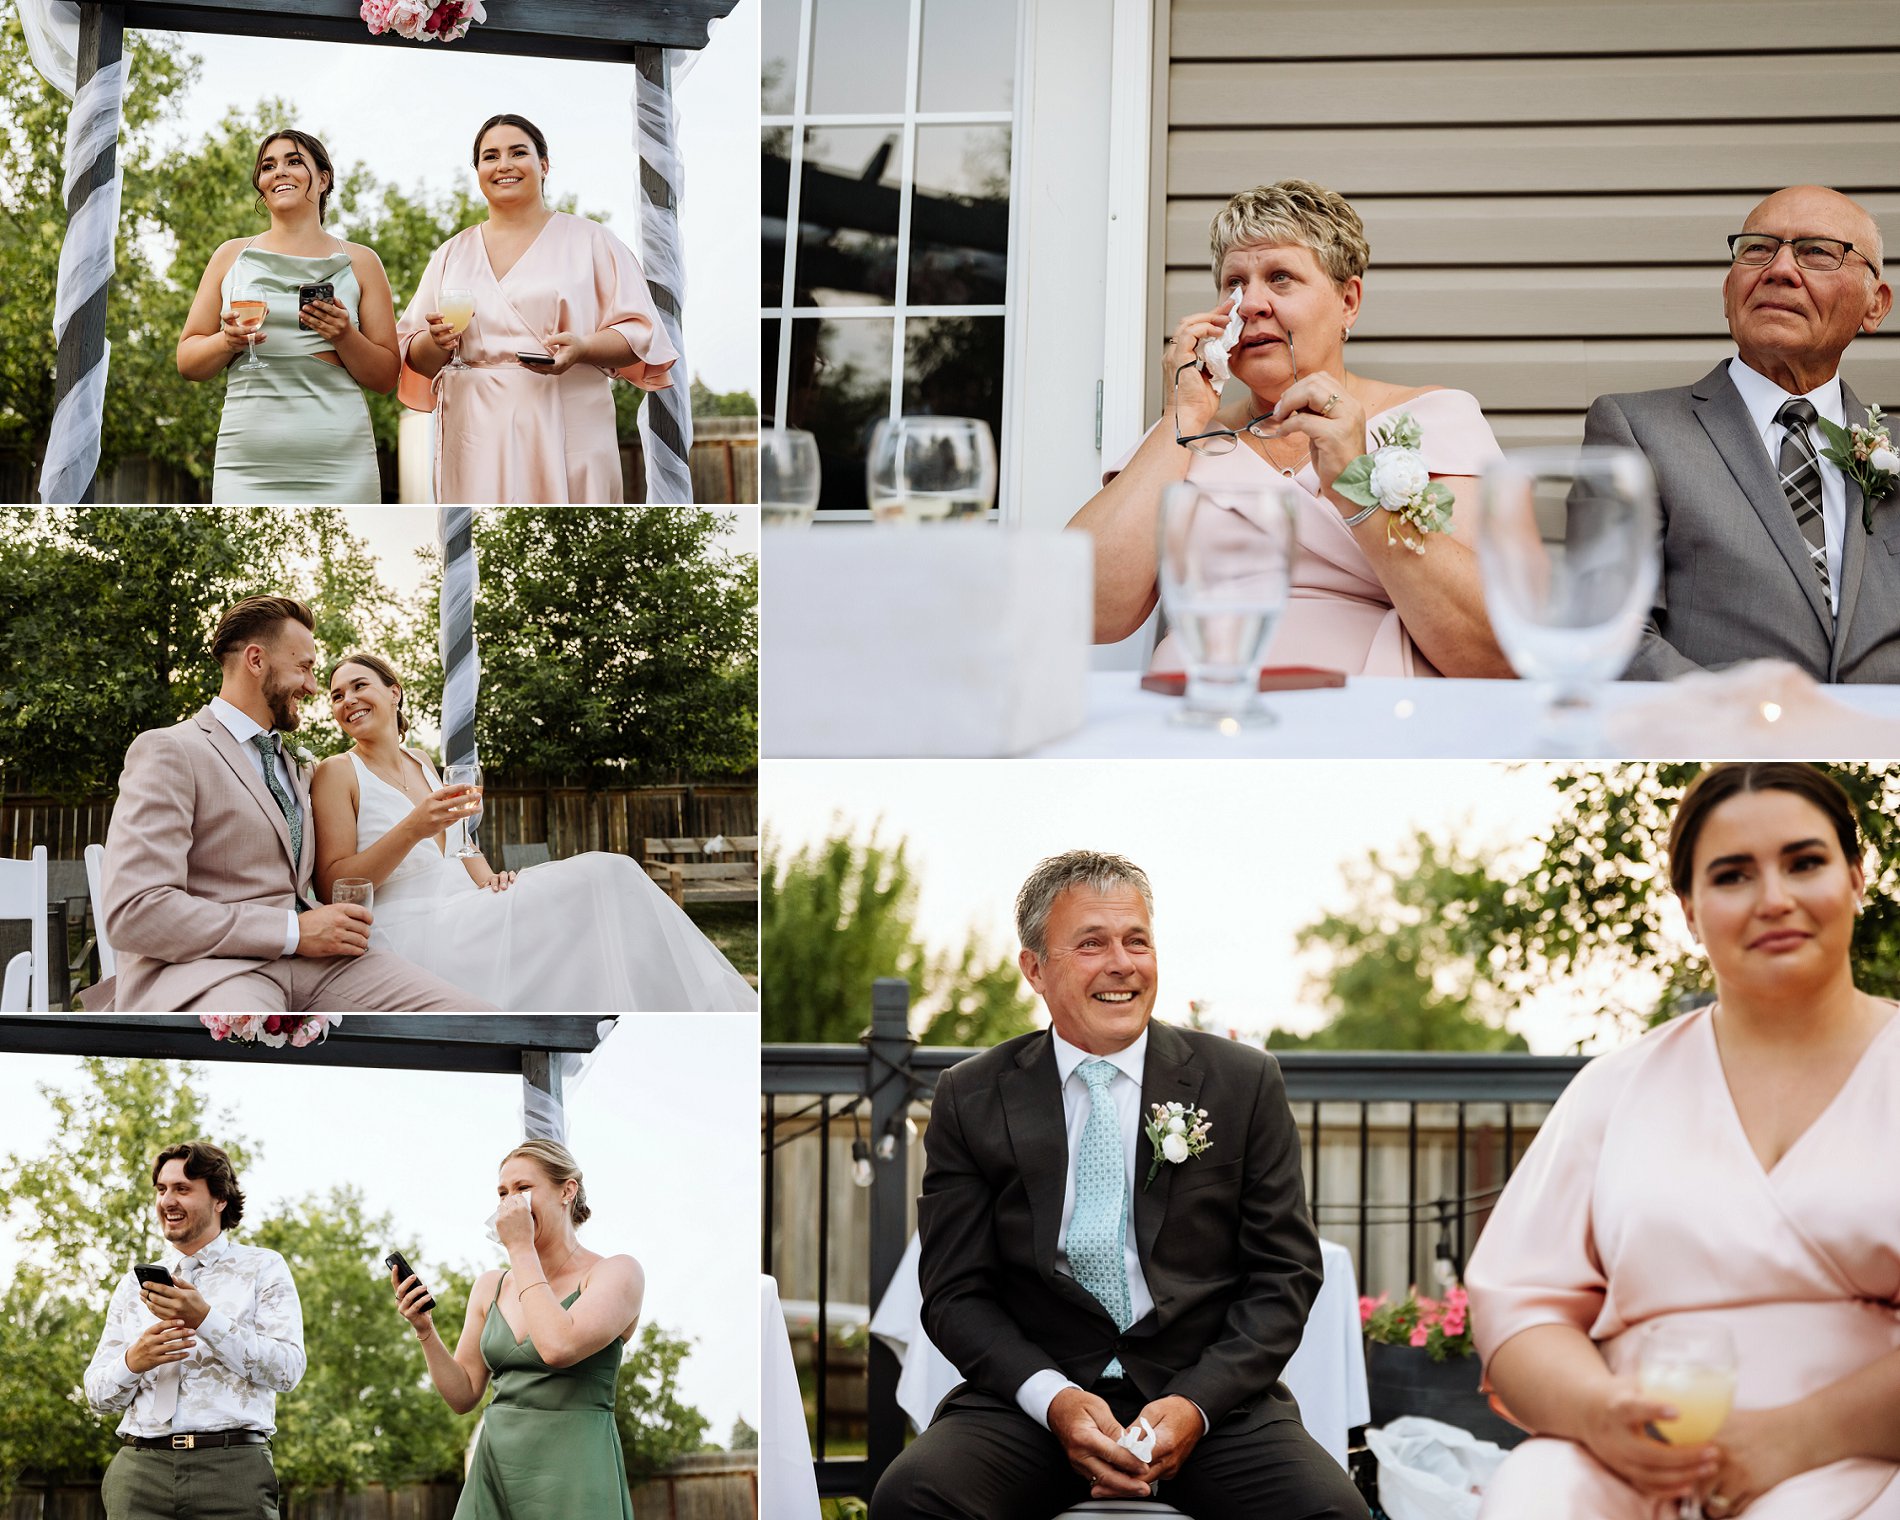 Candid speeches at a Saskatoon outdoor wedding reception at golden hour.